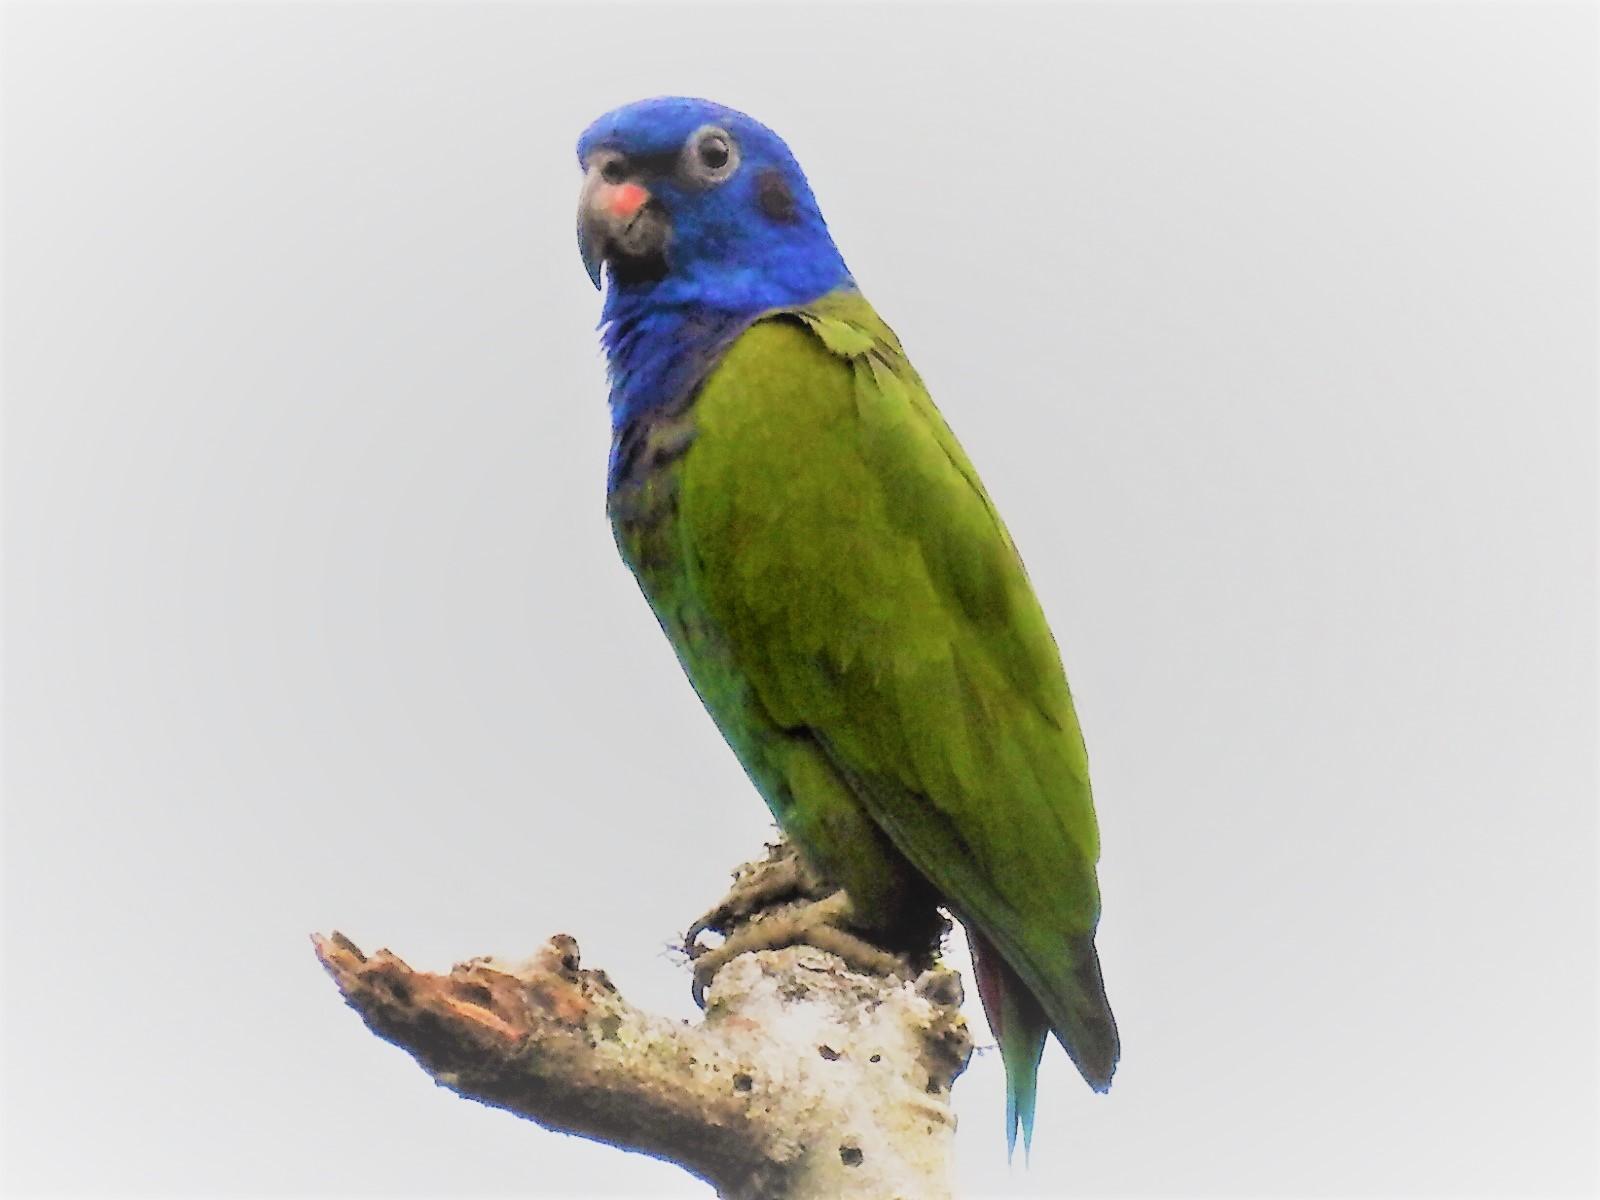 Blue-headed Parrot Photo by John Licharson